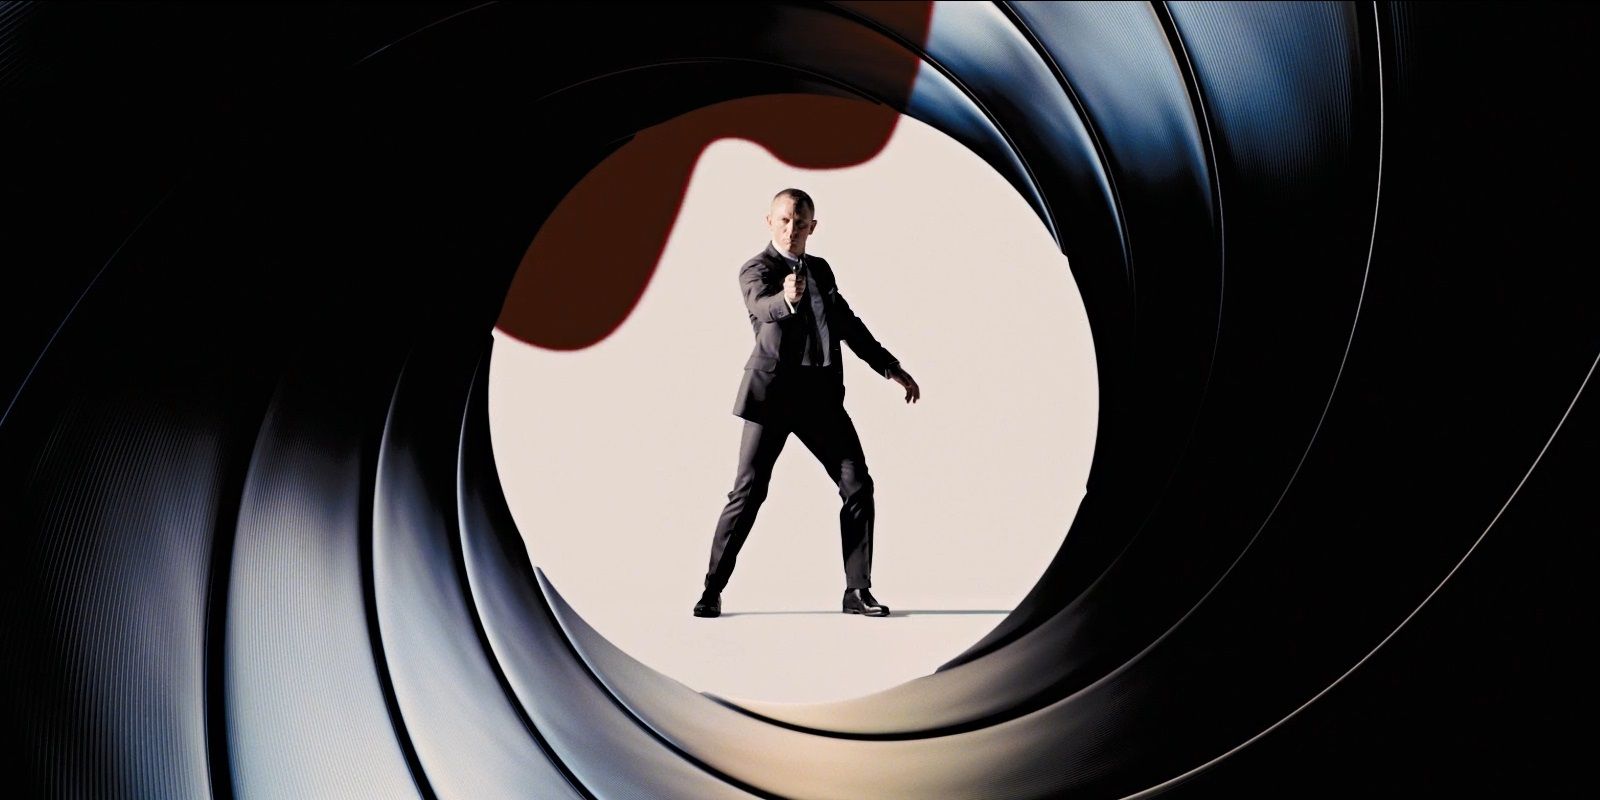 Daniel Craig in a James Bond gun barrel sequence